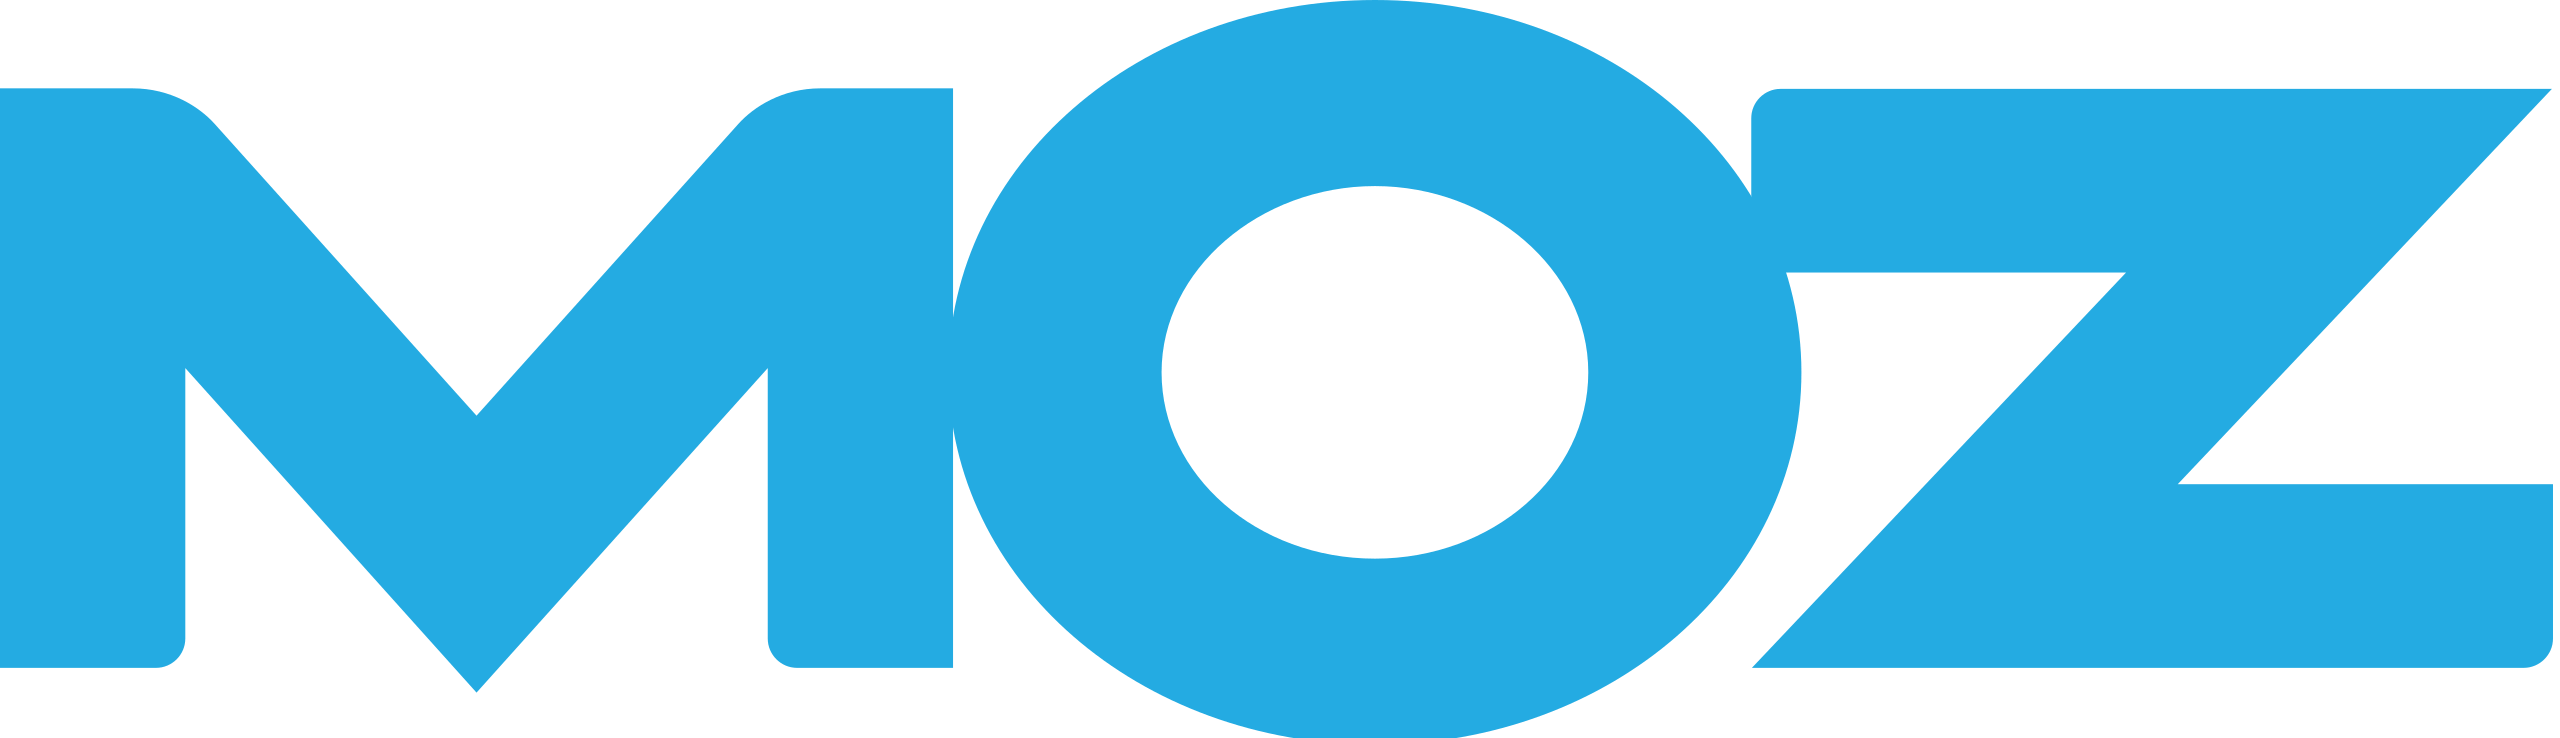 Moz_logo